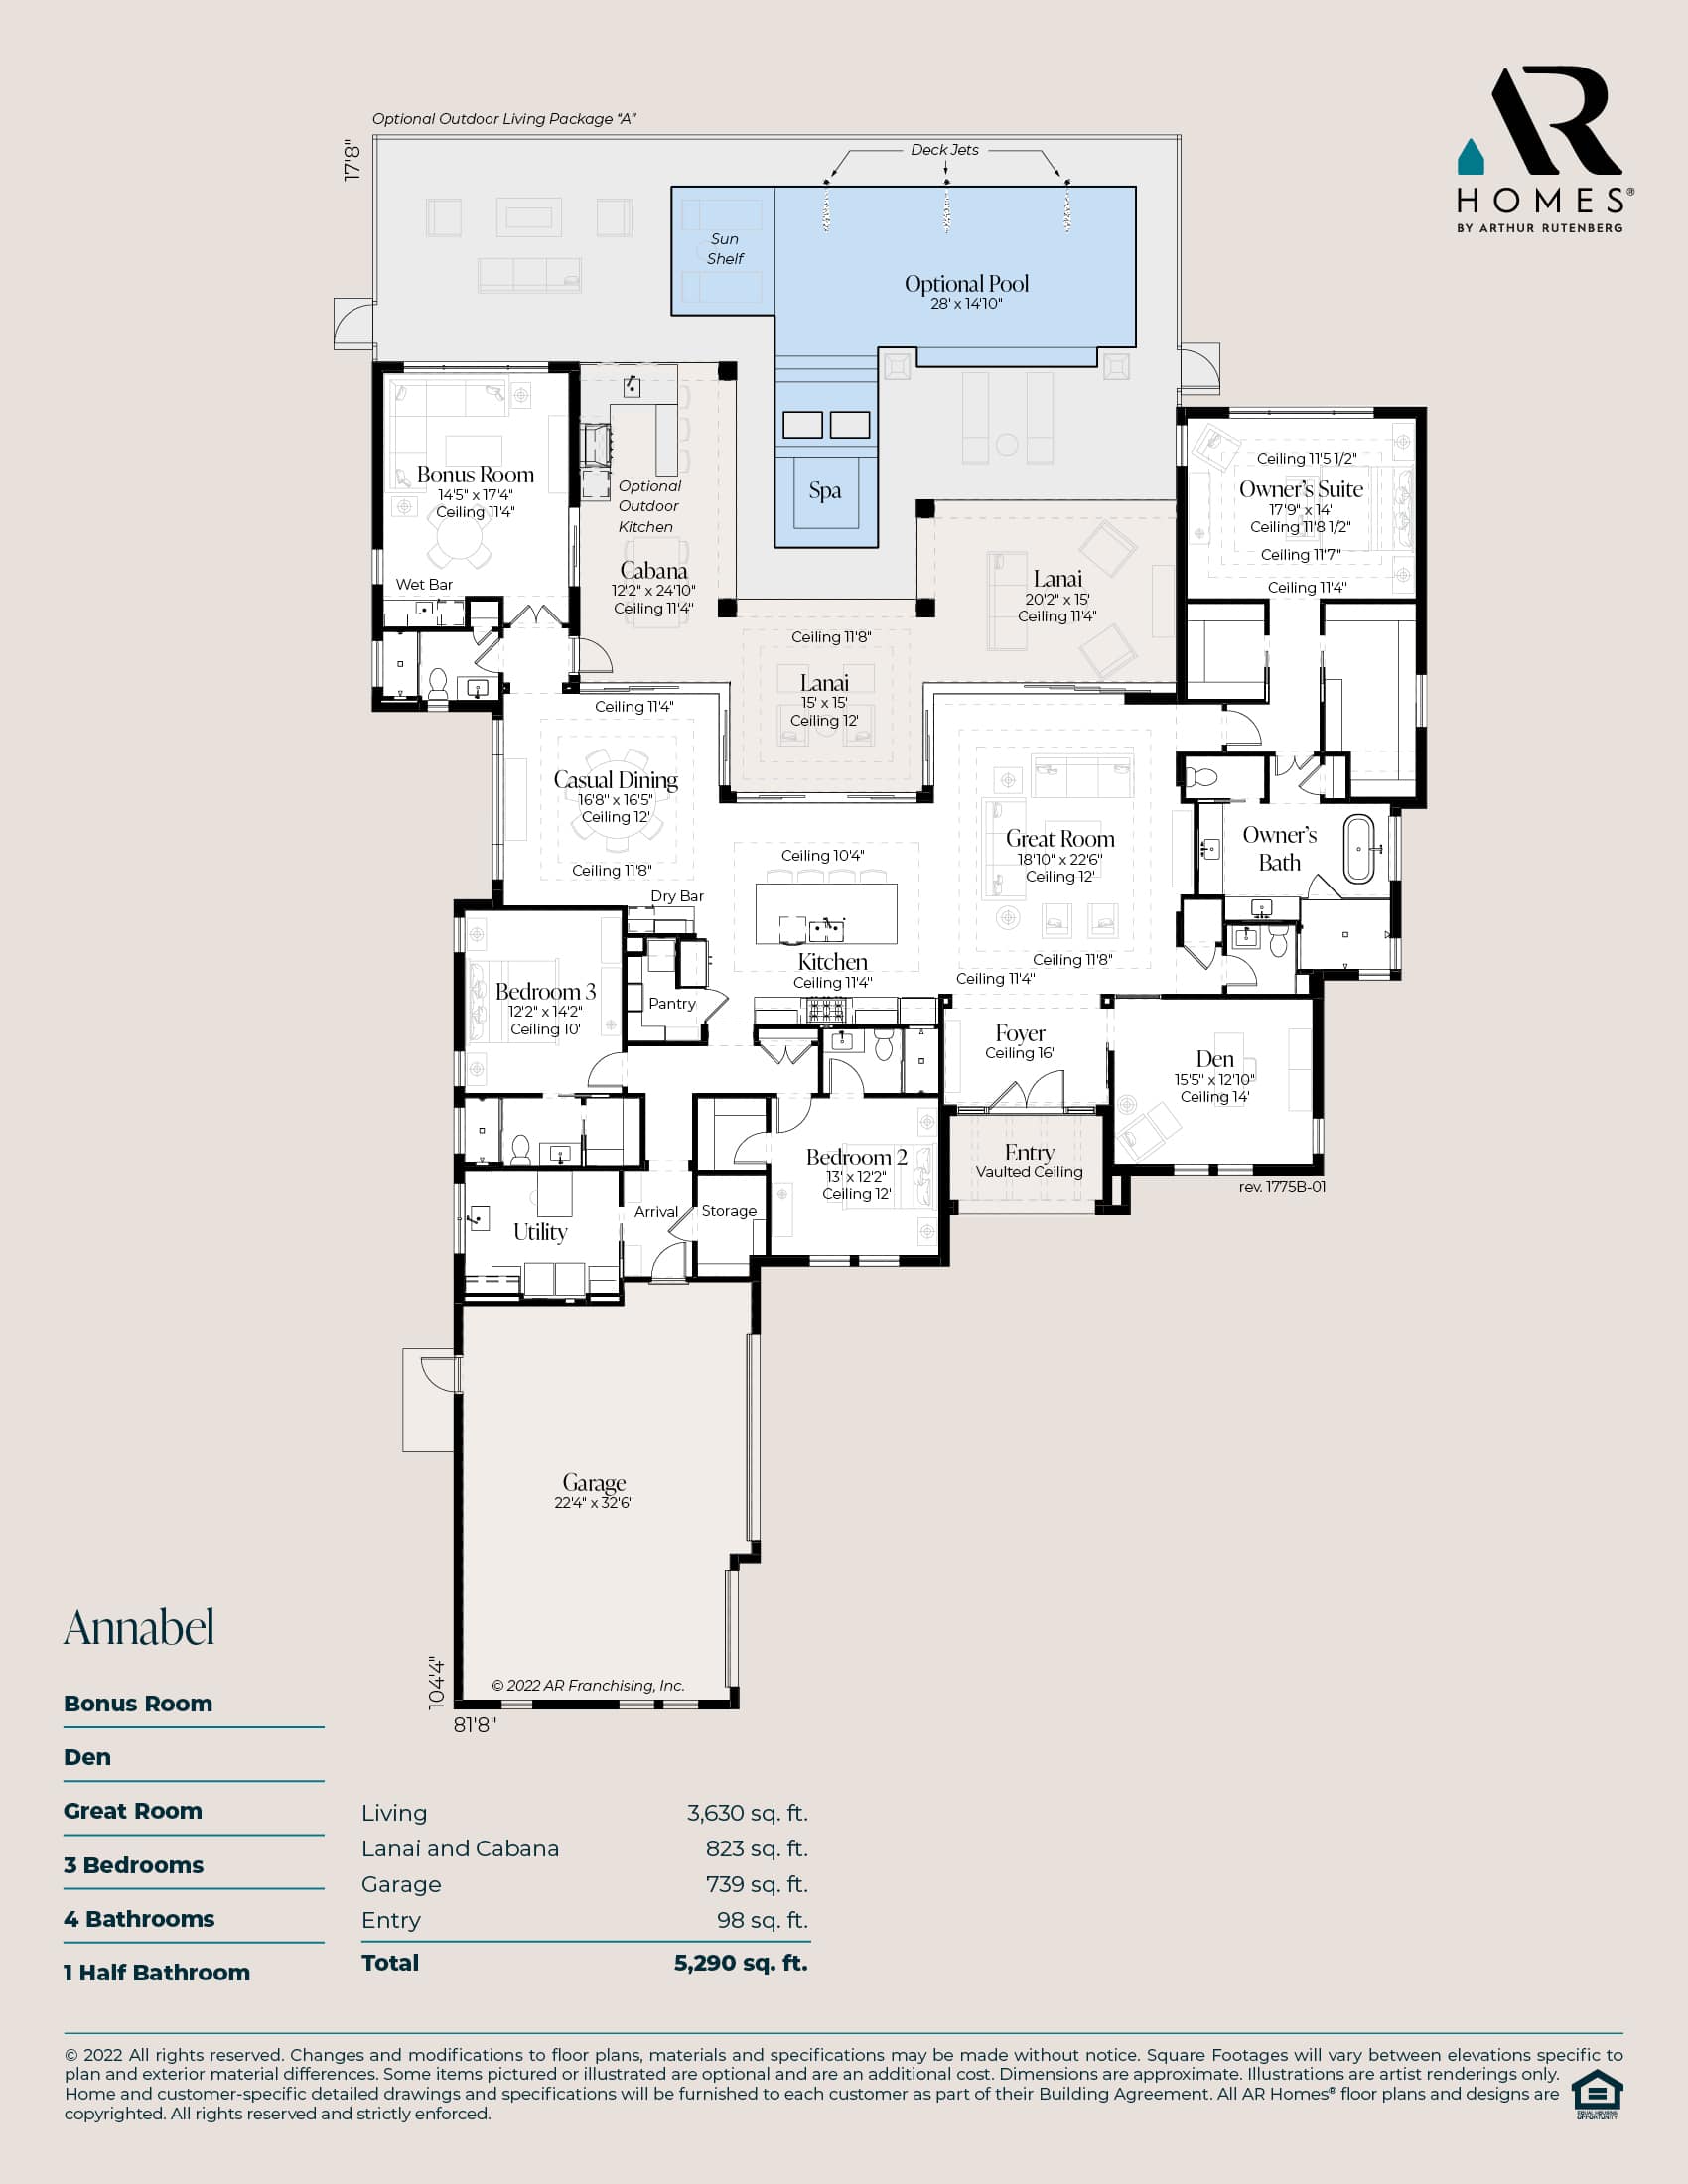 The Annabel Plan Ar Homes By Arthur Rutenberg